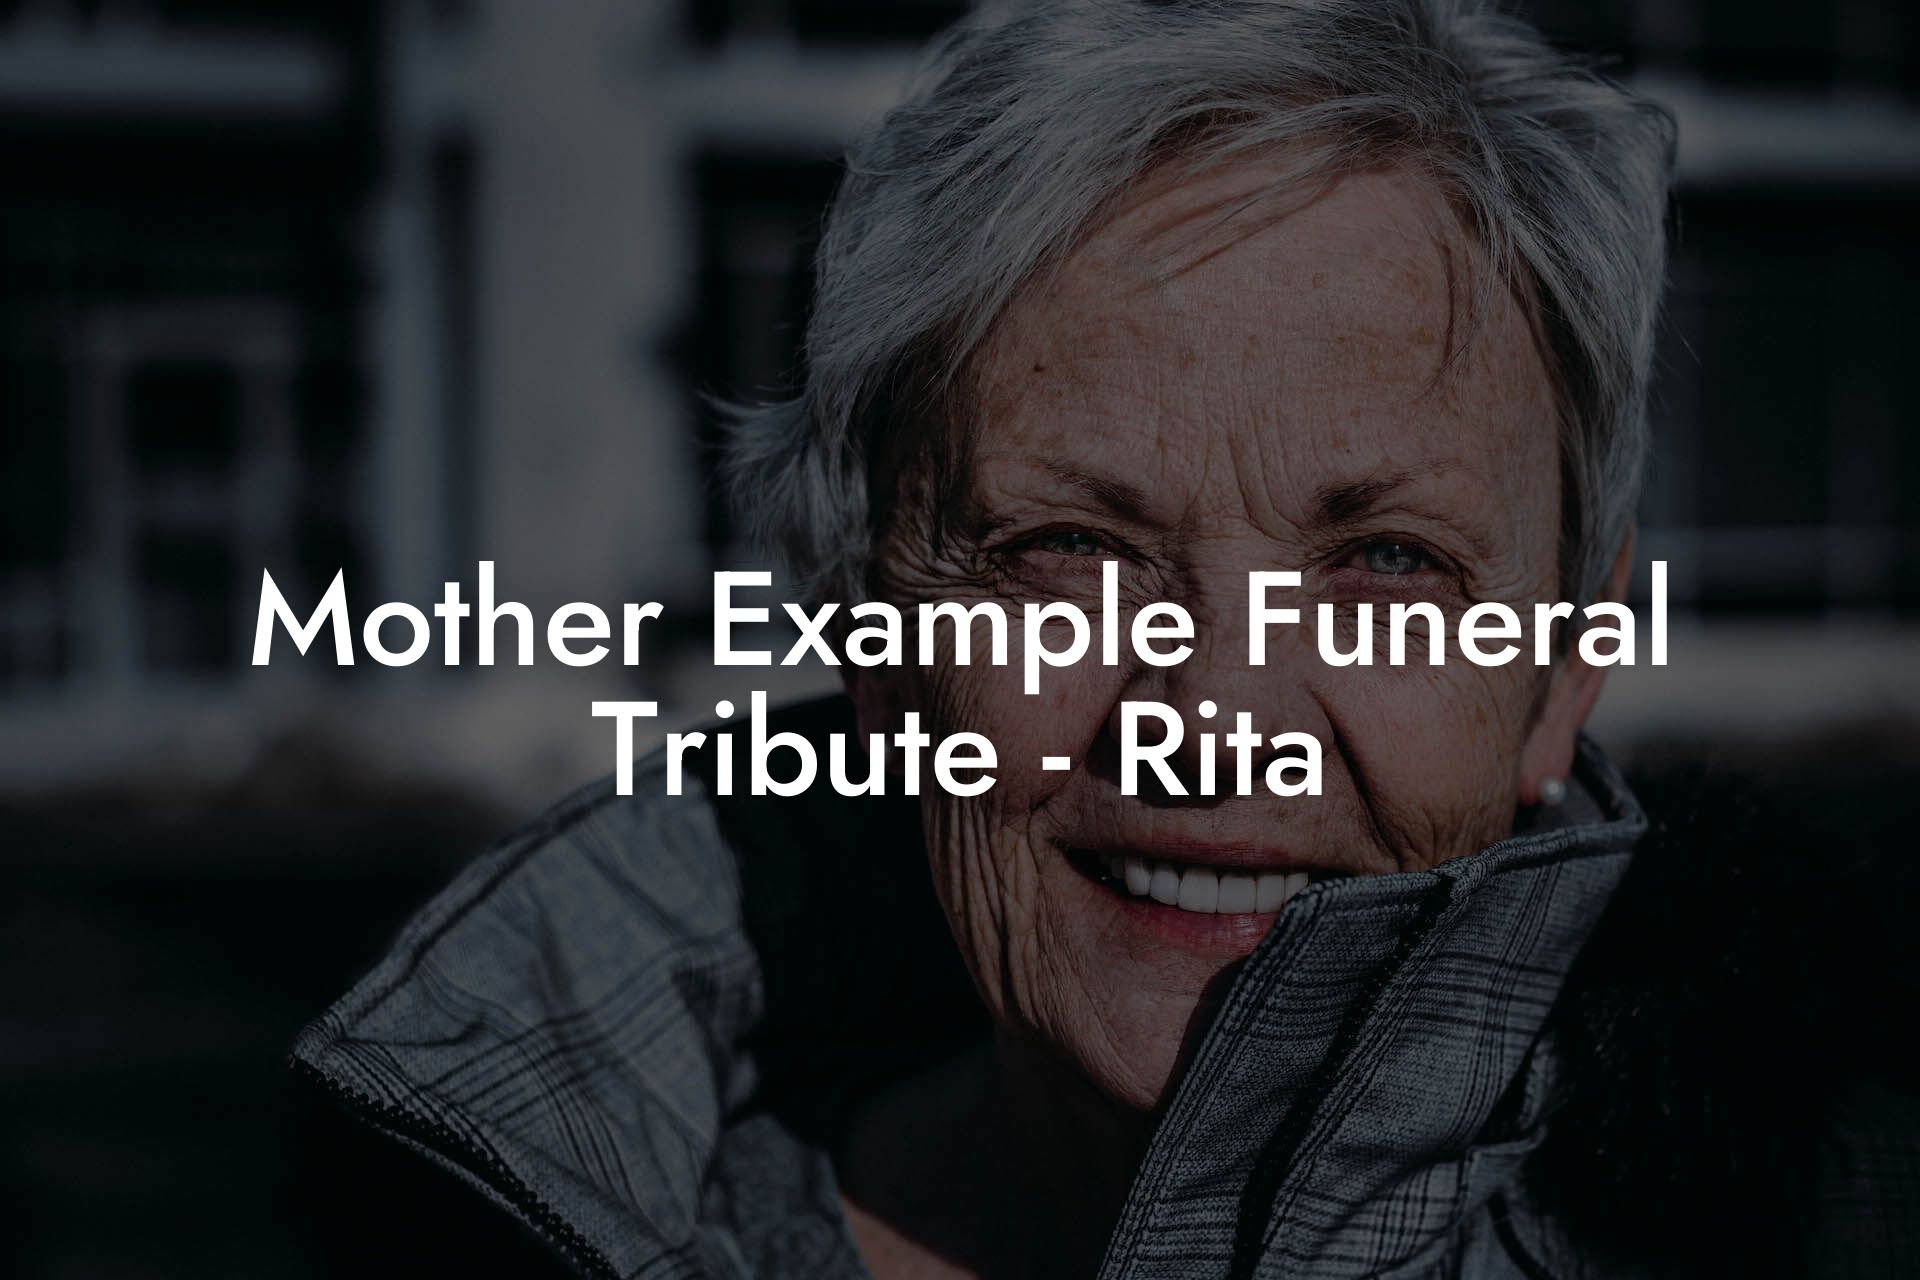 Mother Example Funeral Tribute - Rita